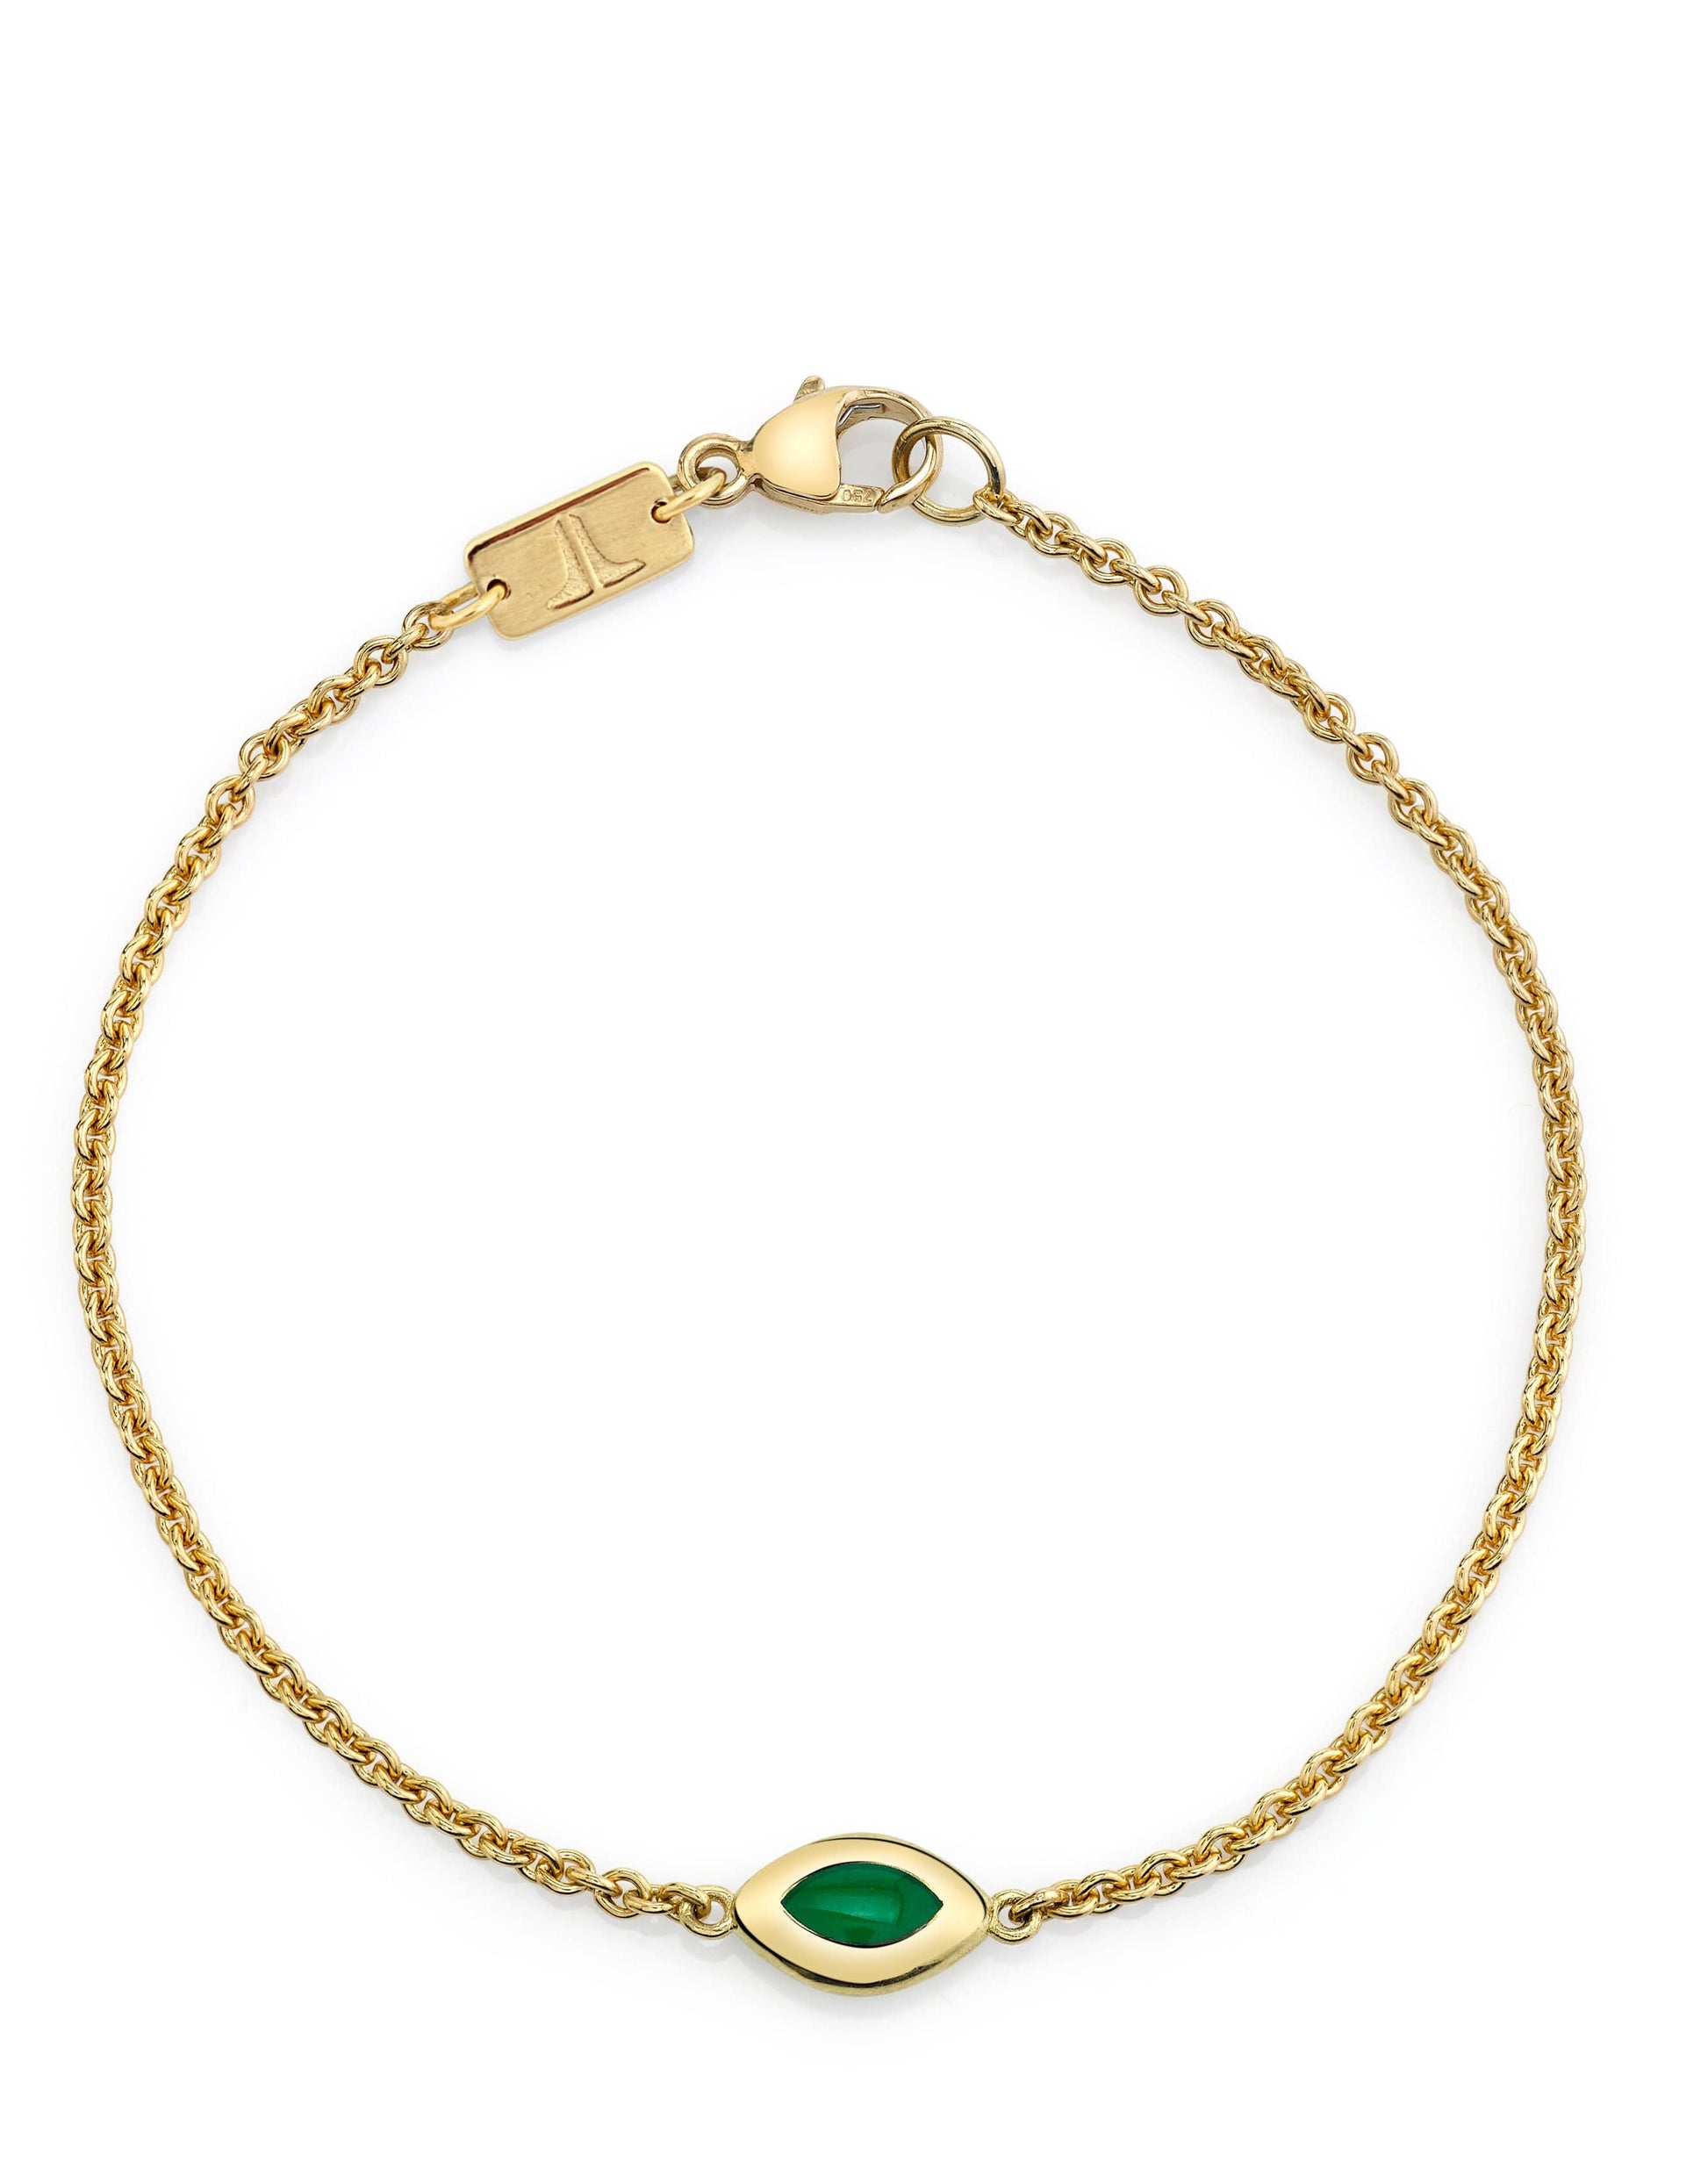 ANDY LIF-Green Enamel Cats Eye Bracelet-YELLOW GOLD